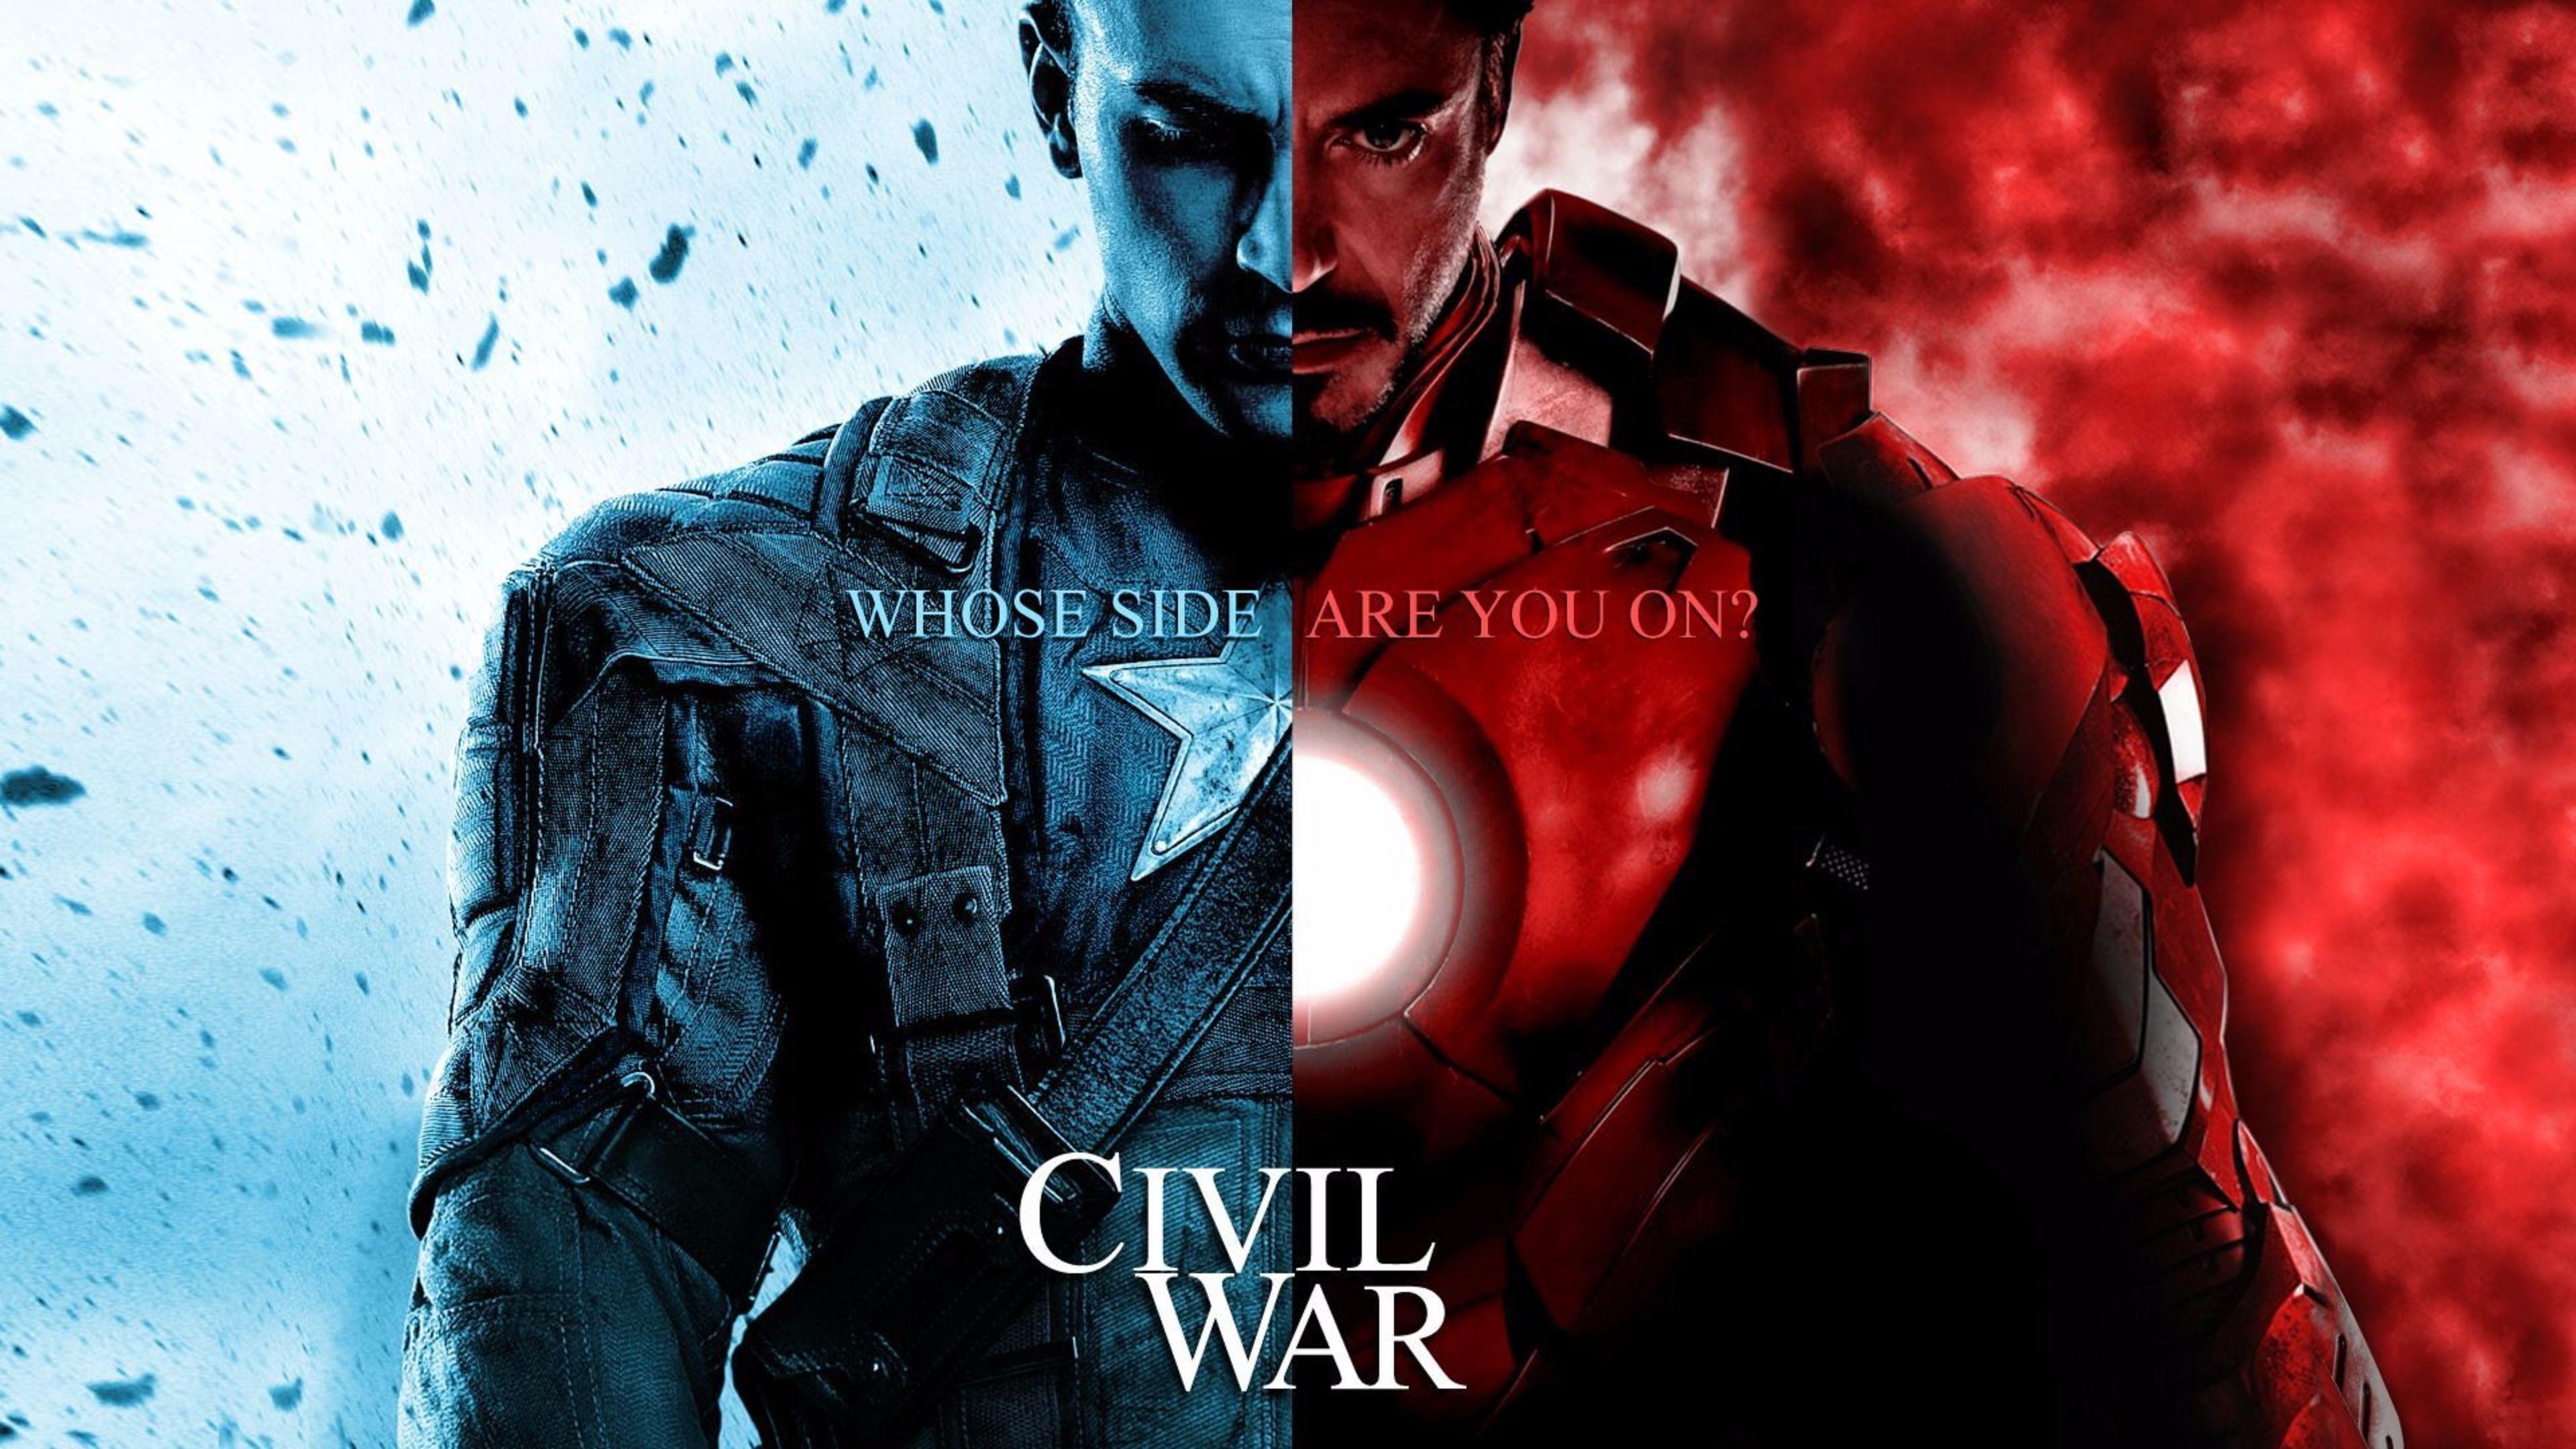 Inspiring Captain America Civil War 4K Wallpaper. Free 4K